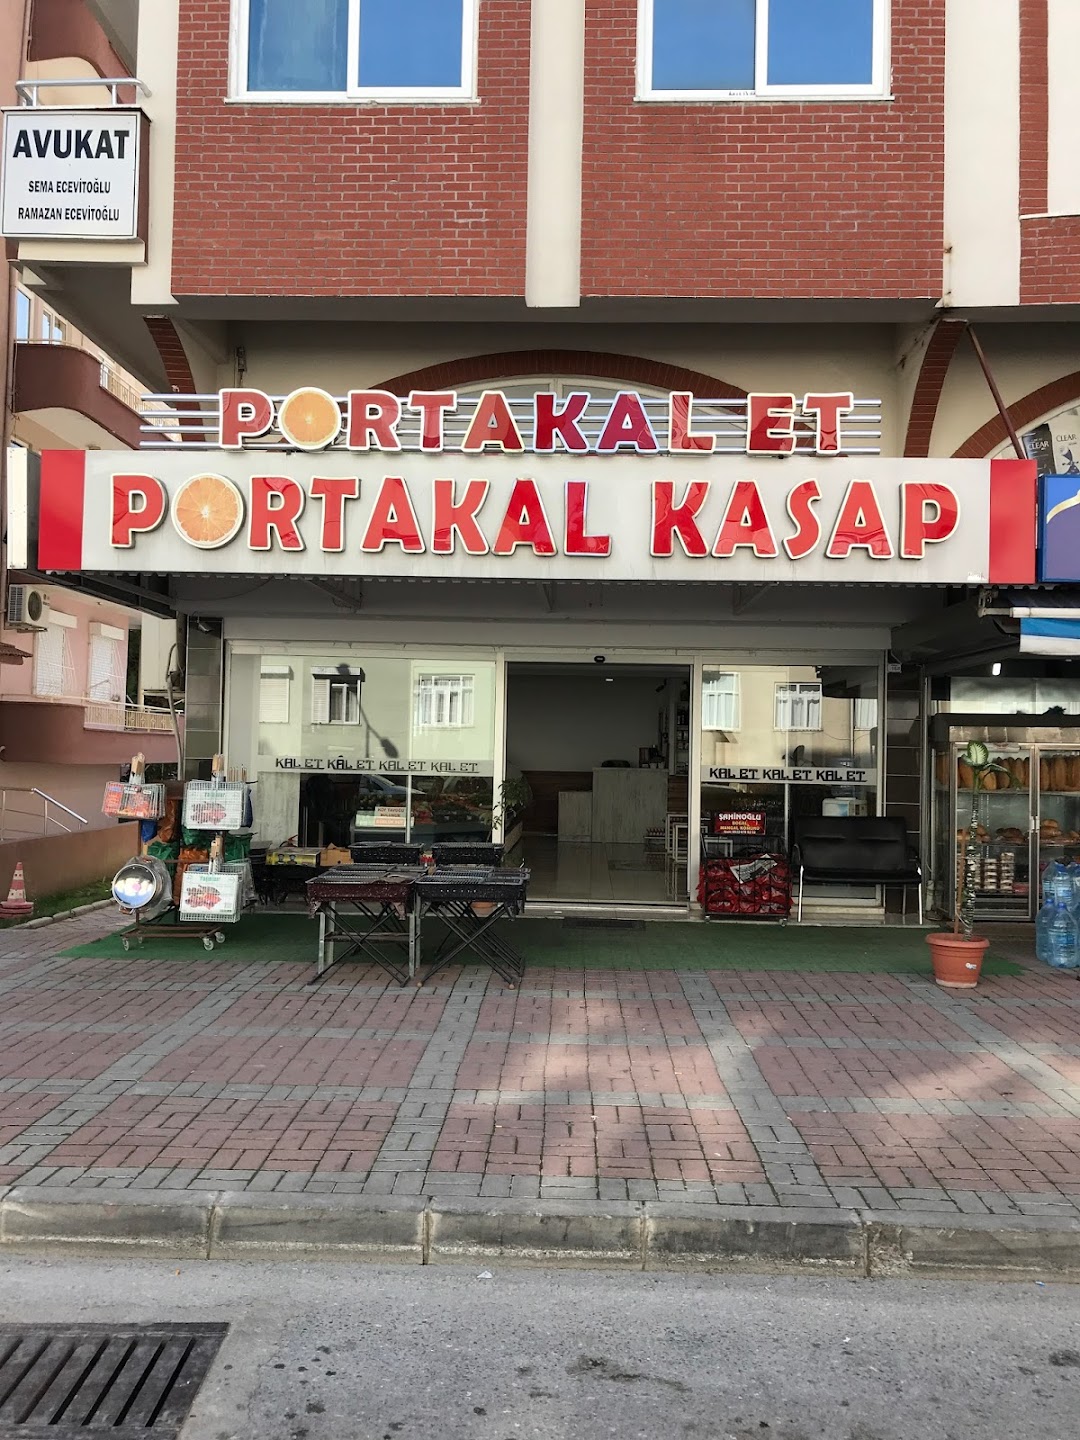 Portakal Kasap